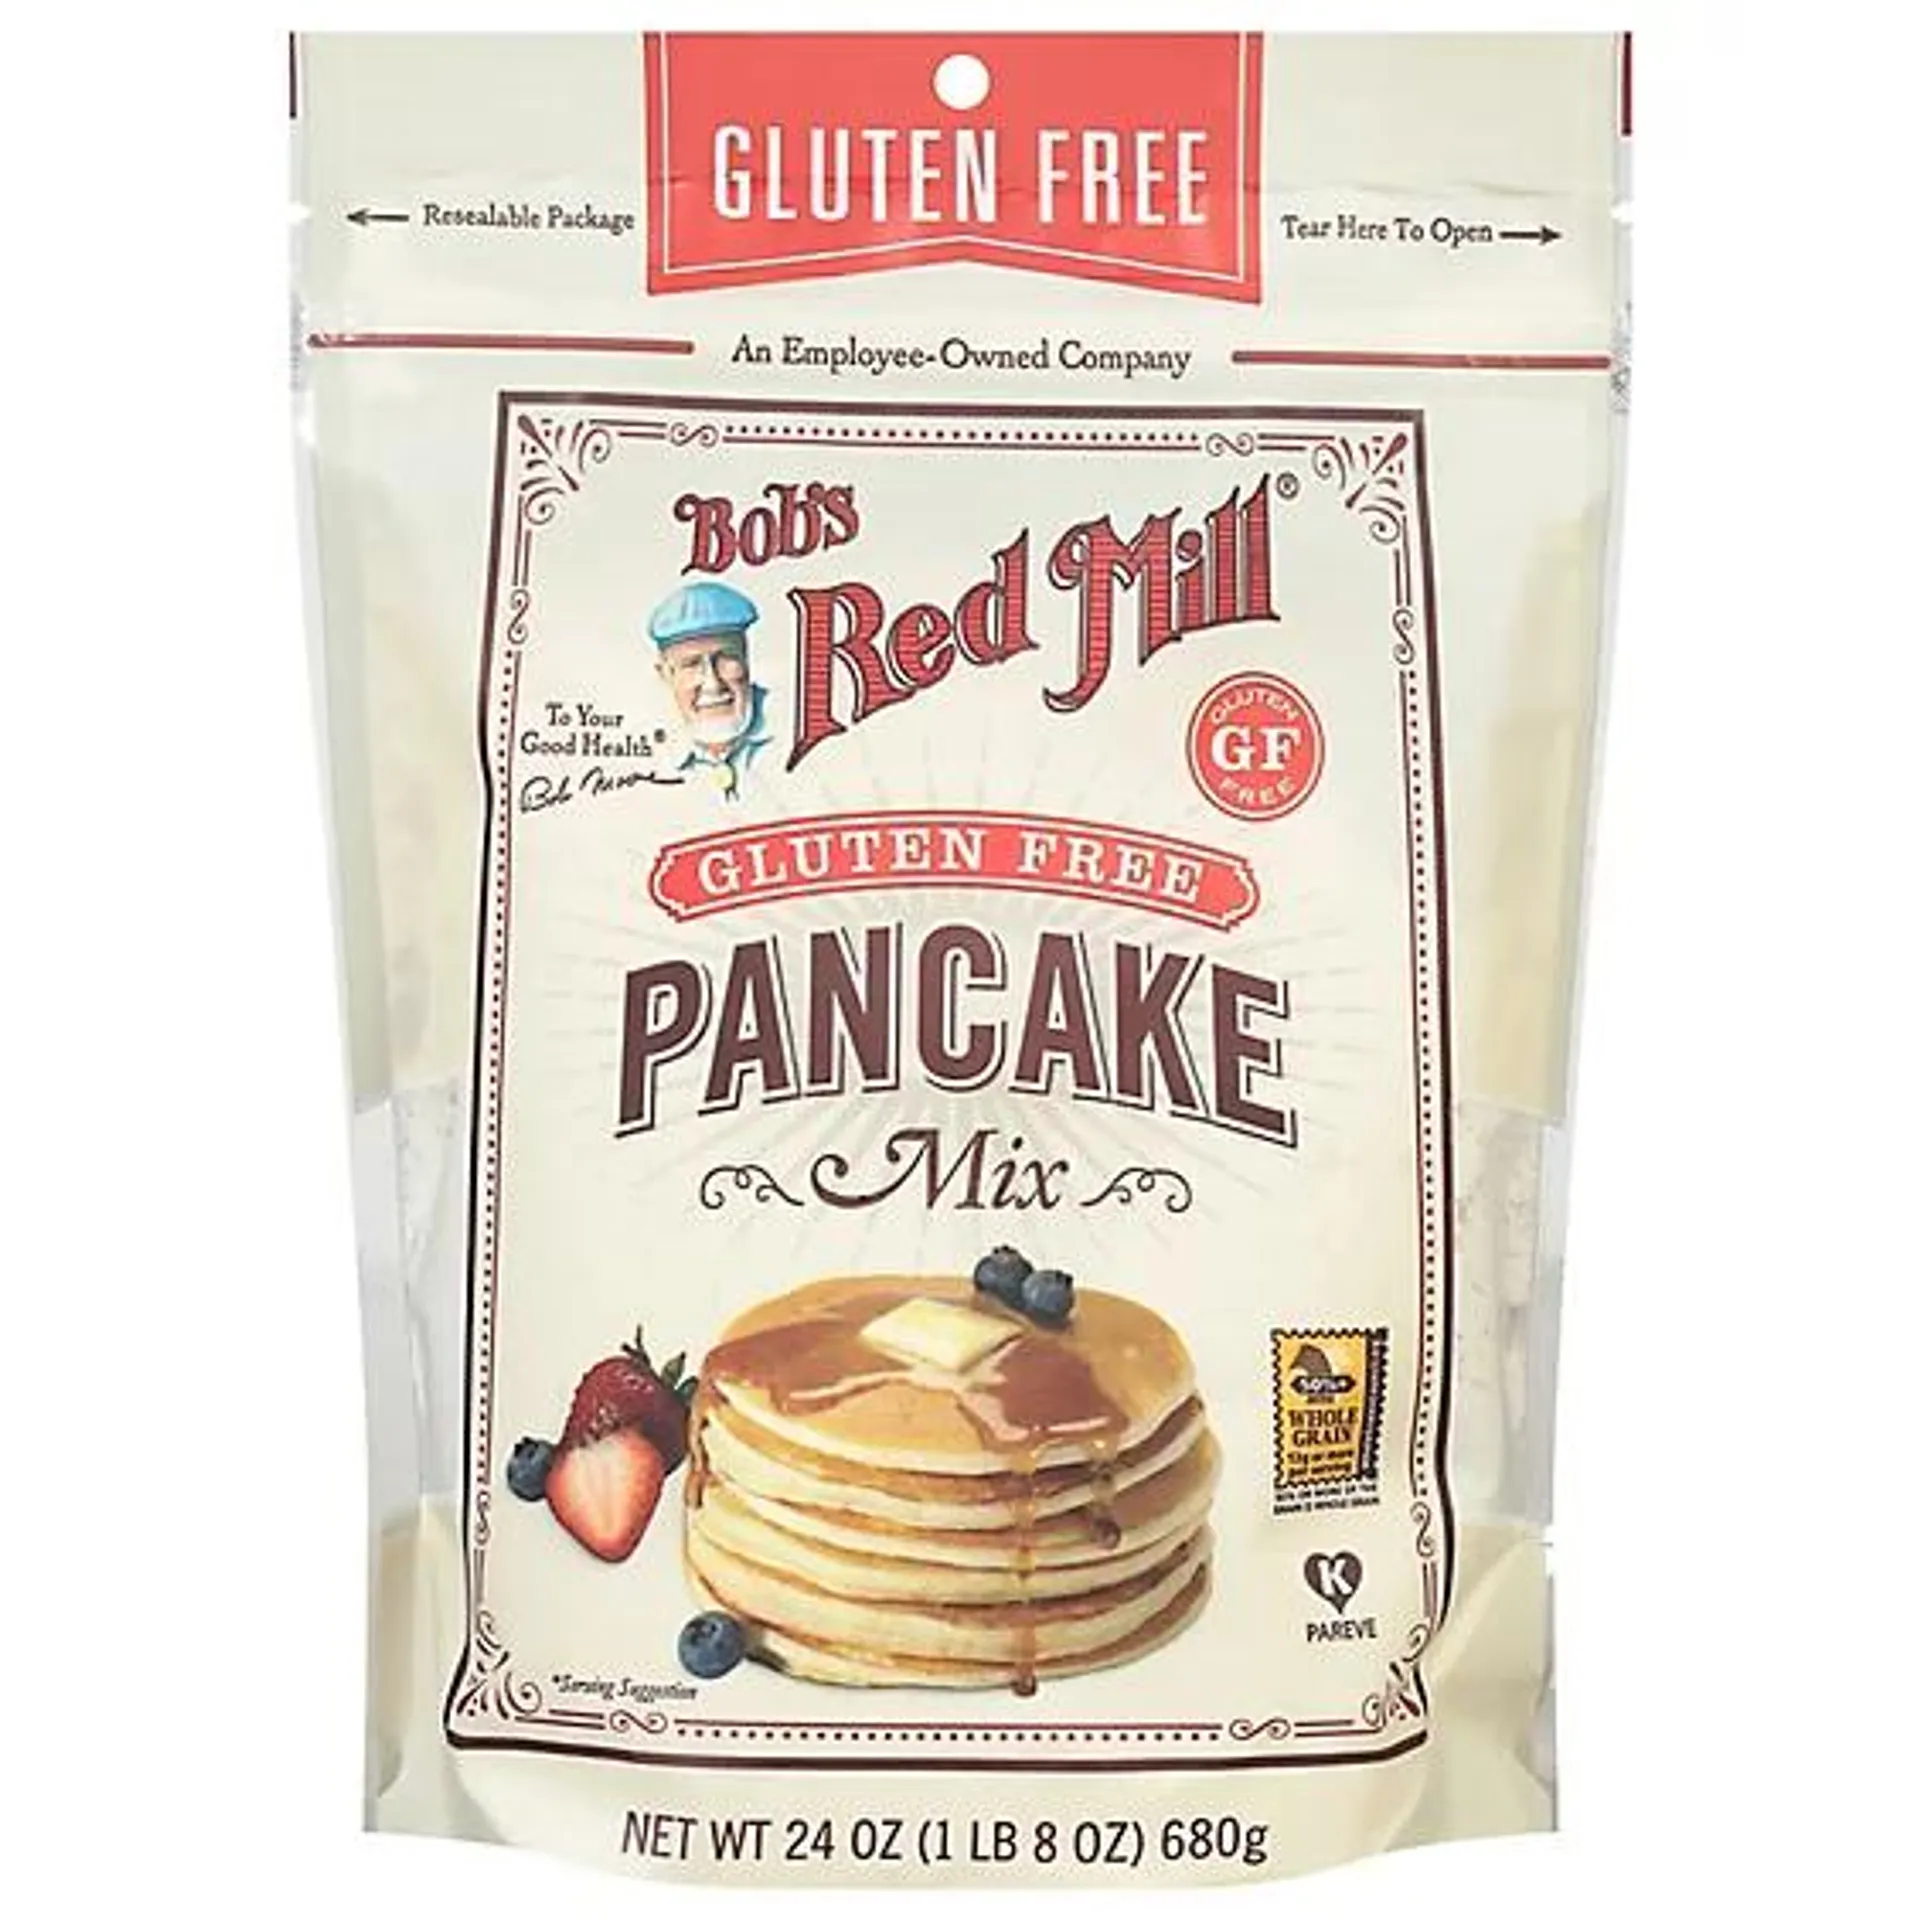 Bob's Red Mill Gluten Free Pancake Mix - 24 Oz